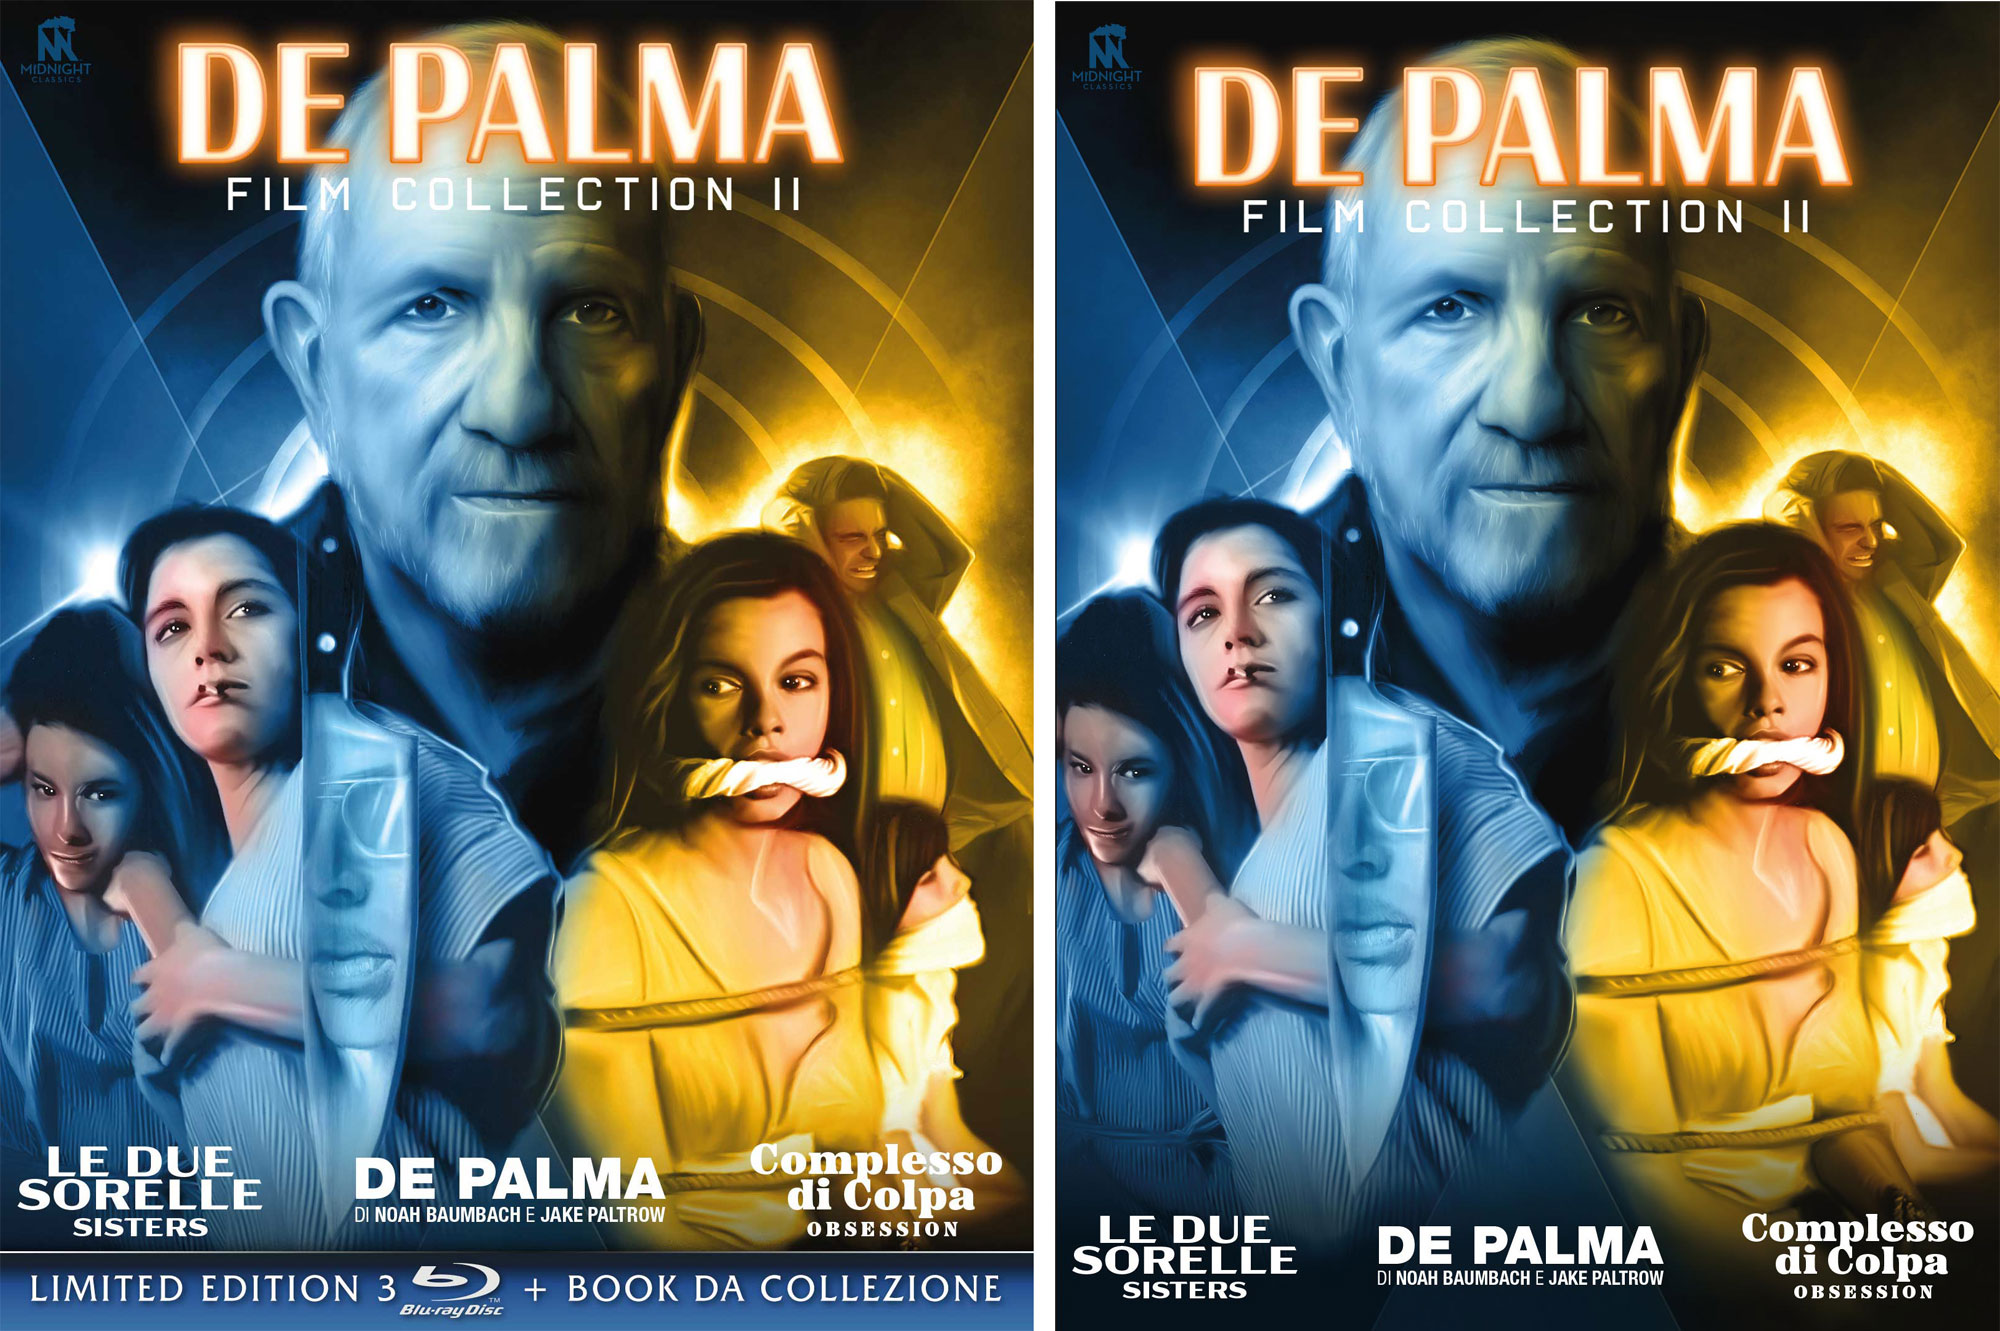 De Palma Film Collection in DVD e Blu-ray